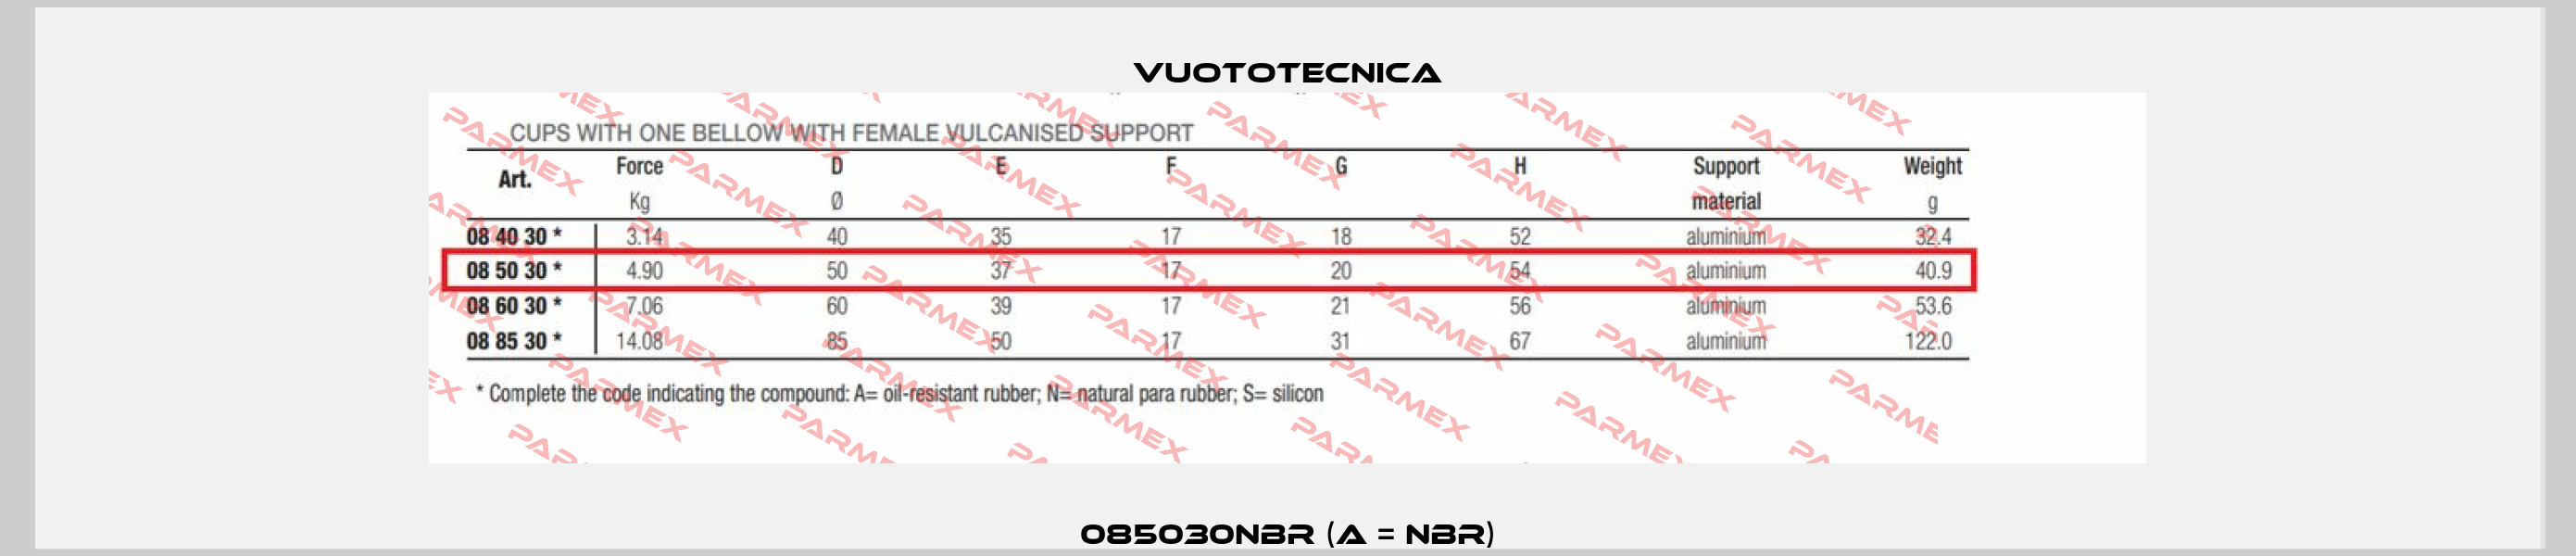 085030NBR (A = NBR) Vuototecnica